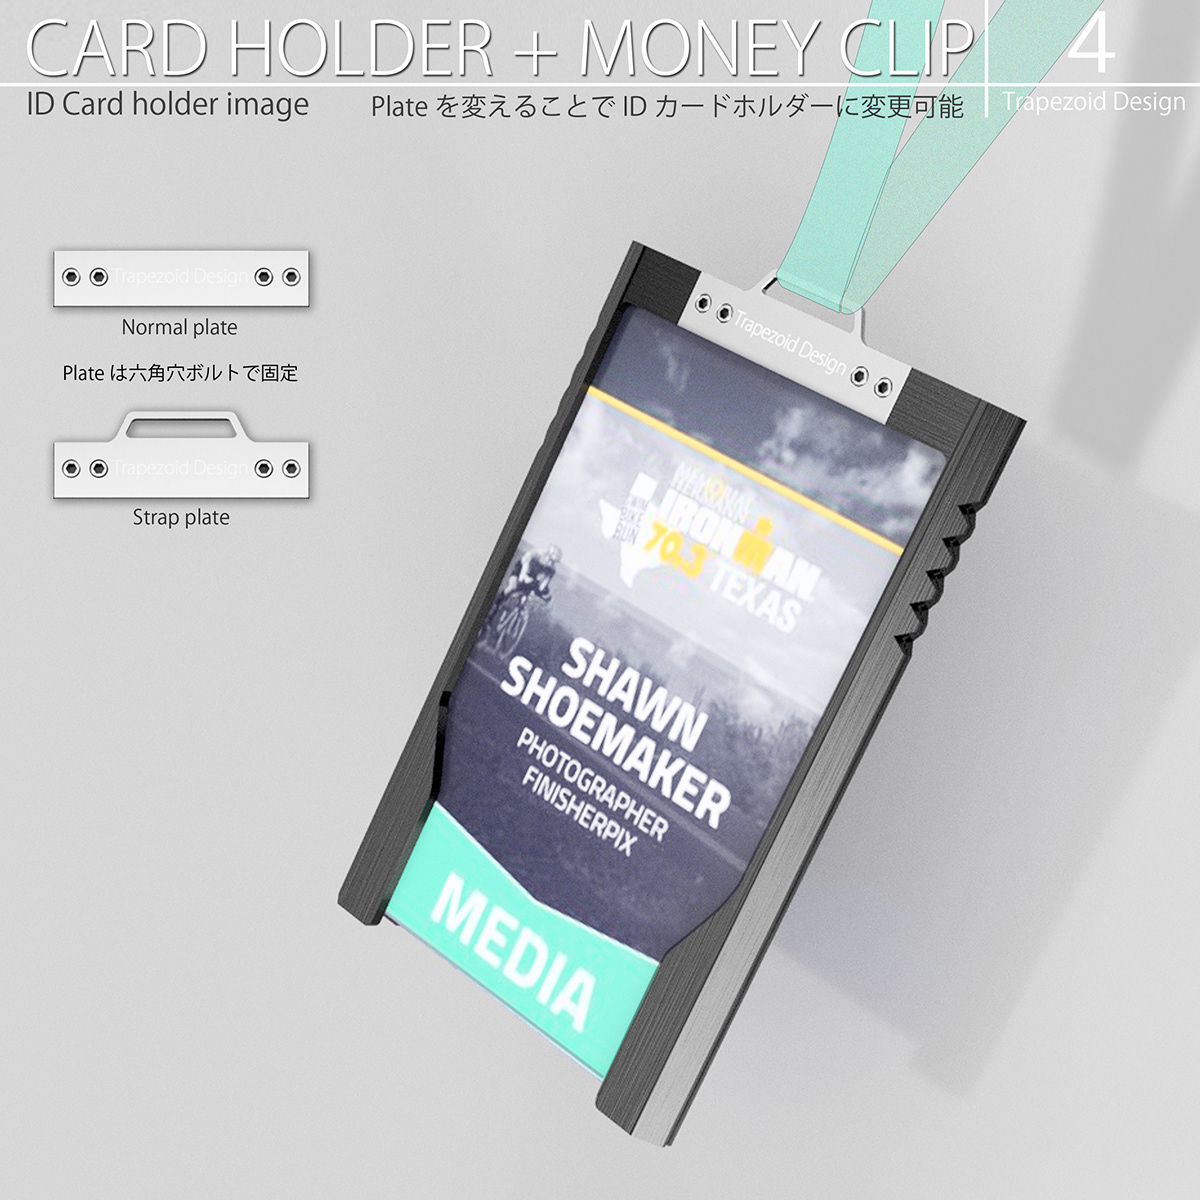 CARD HOLDER + MONEY CLIP DESIGN concept metal clip modern luxury purse